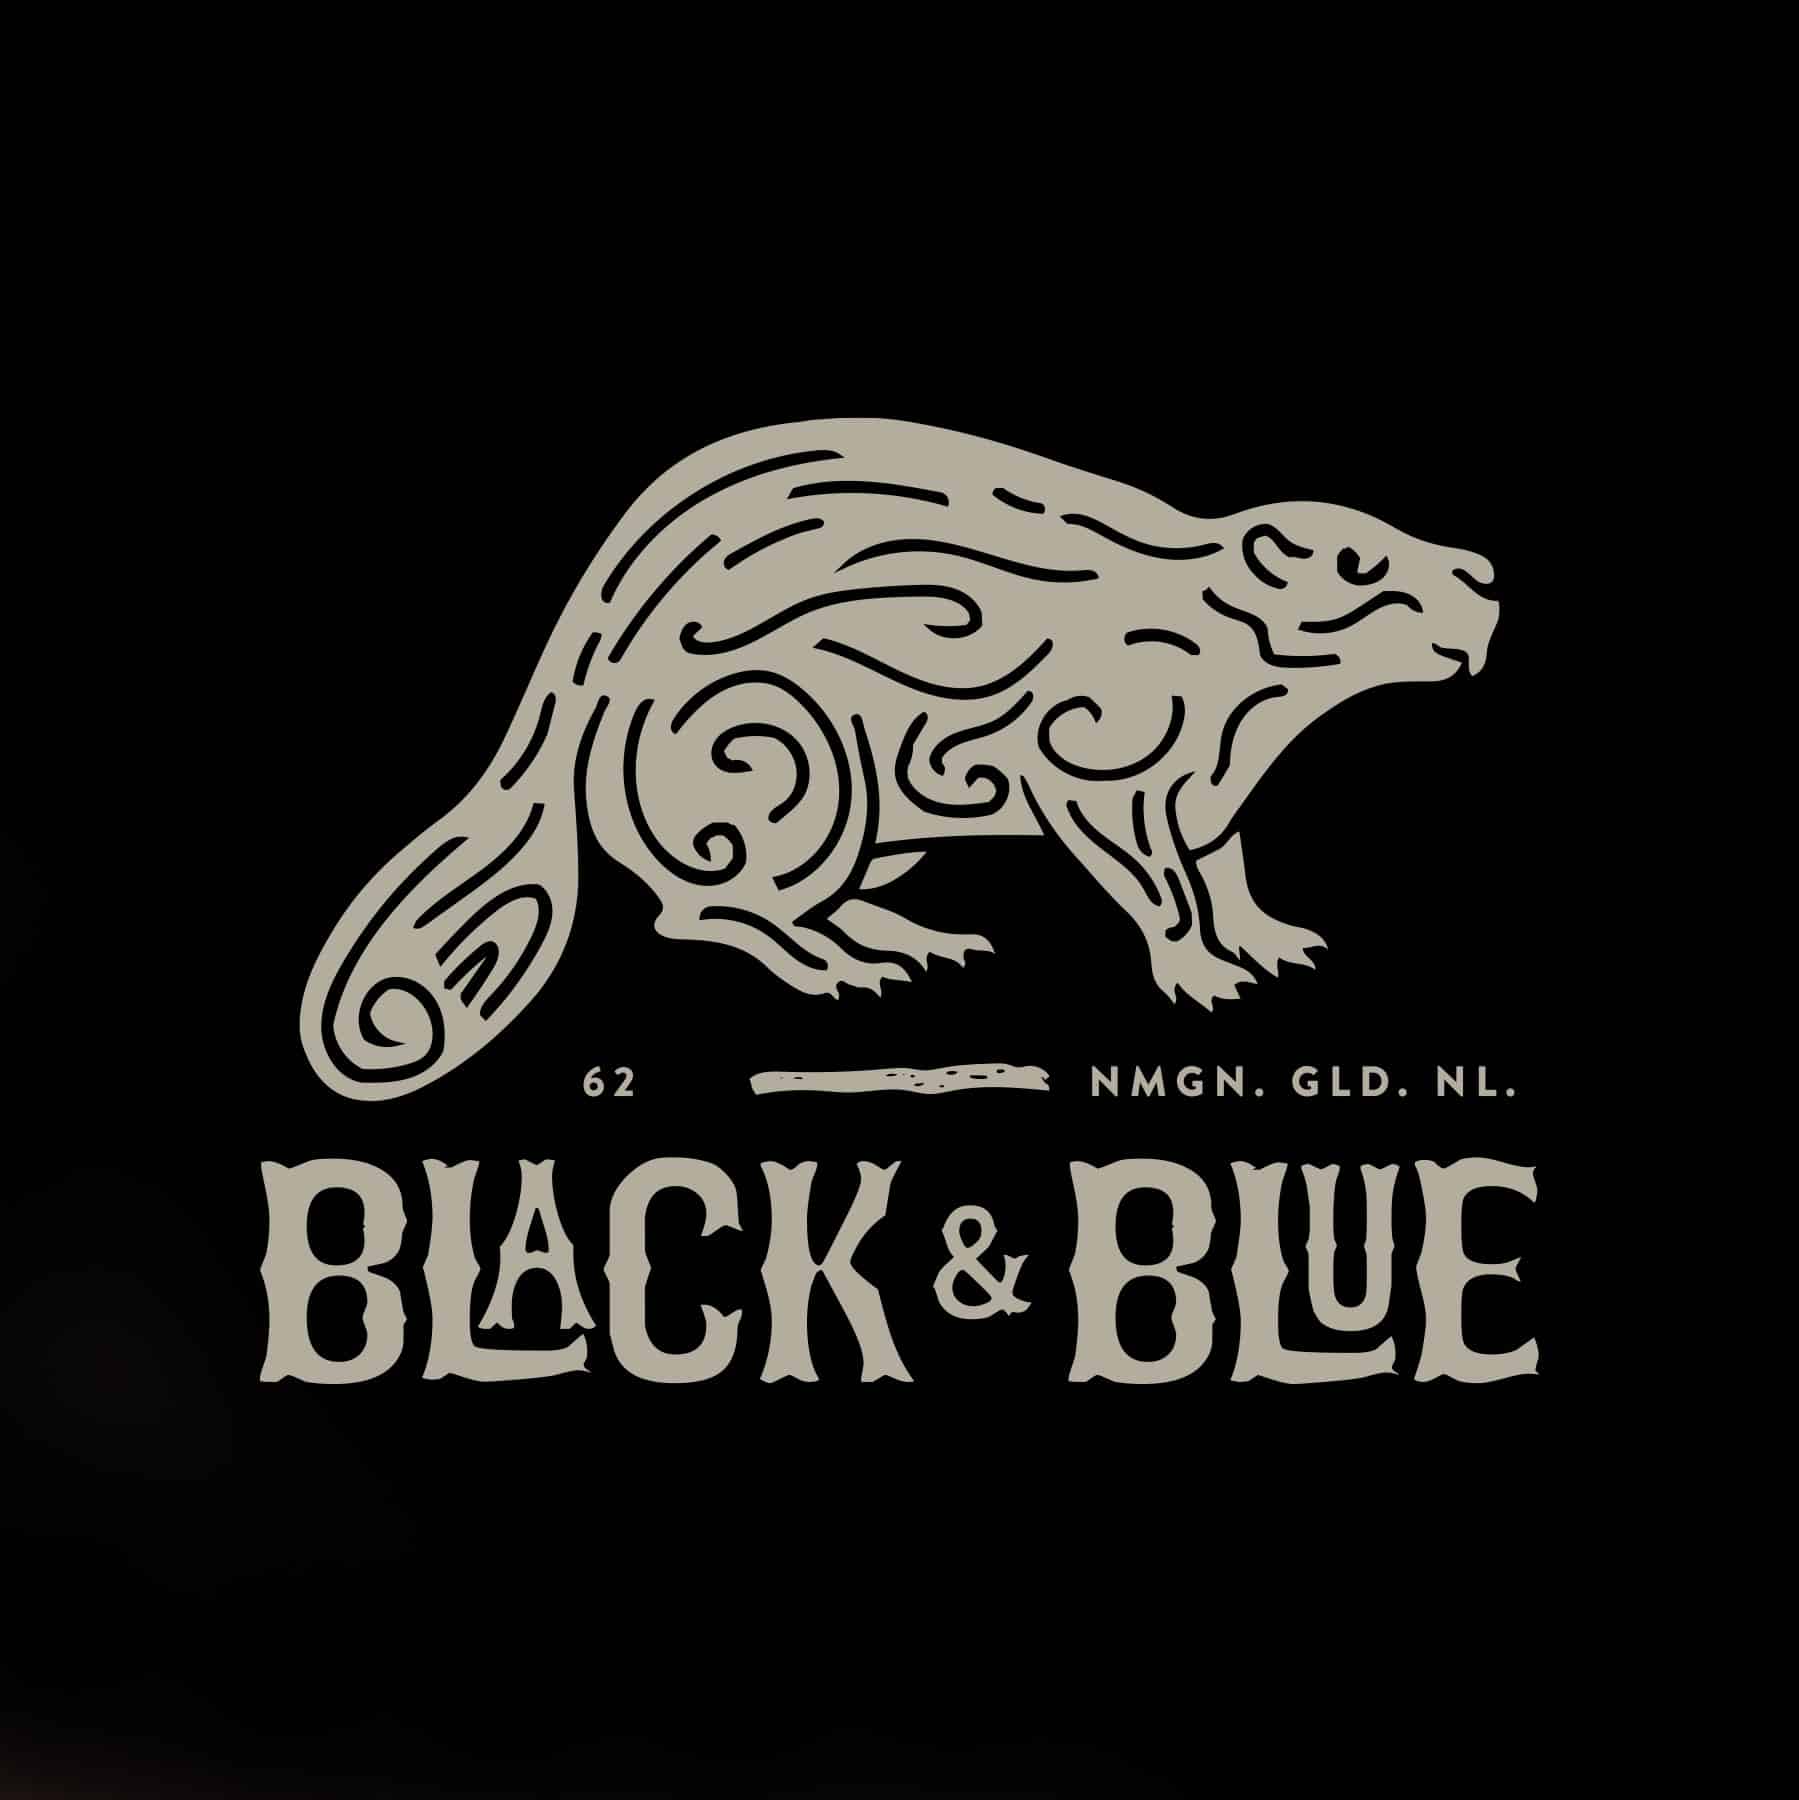 Black & Blue BBQ - Logo